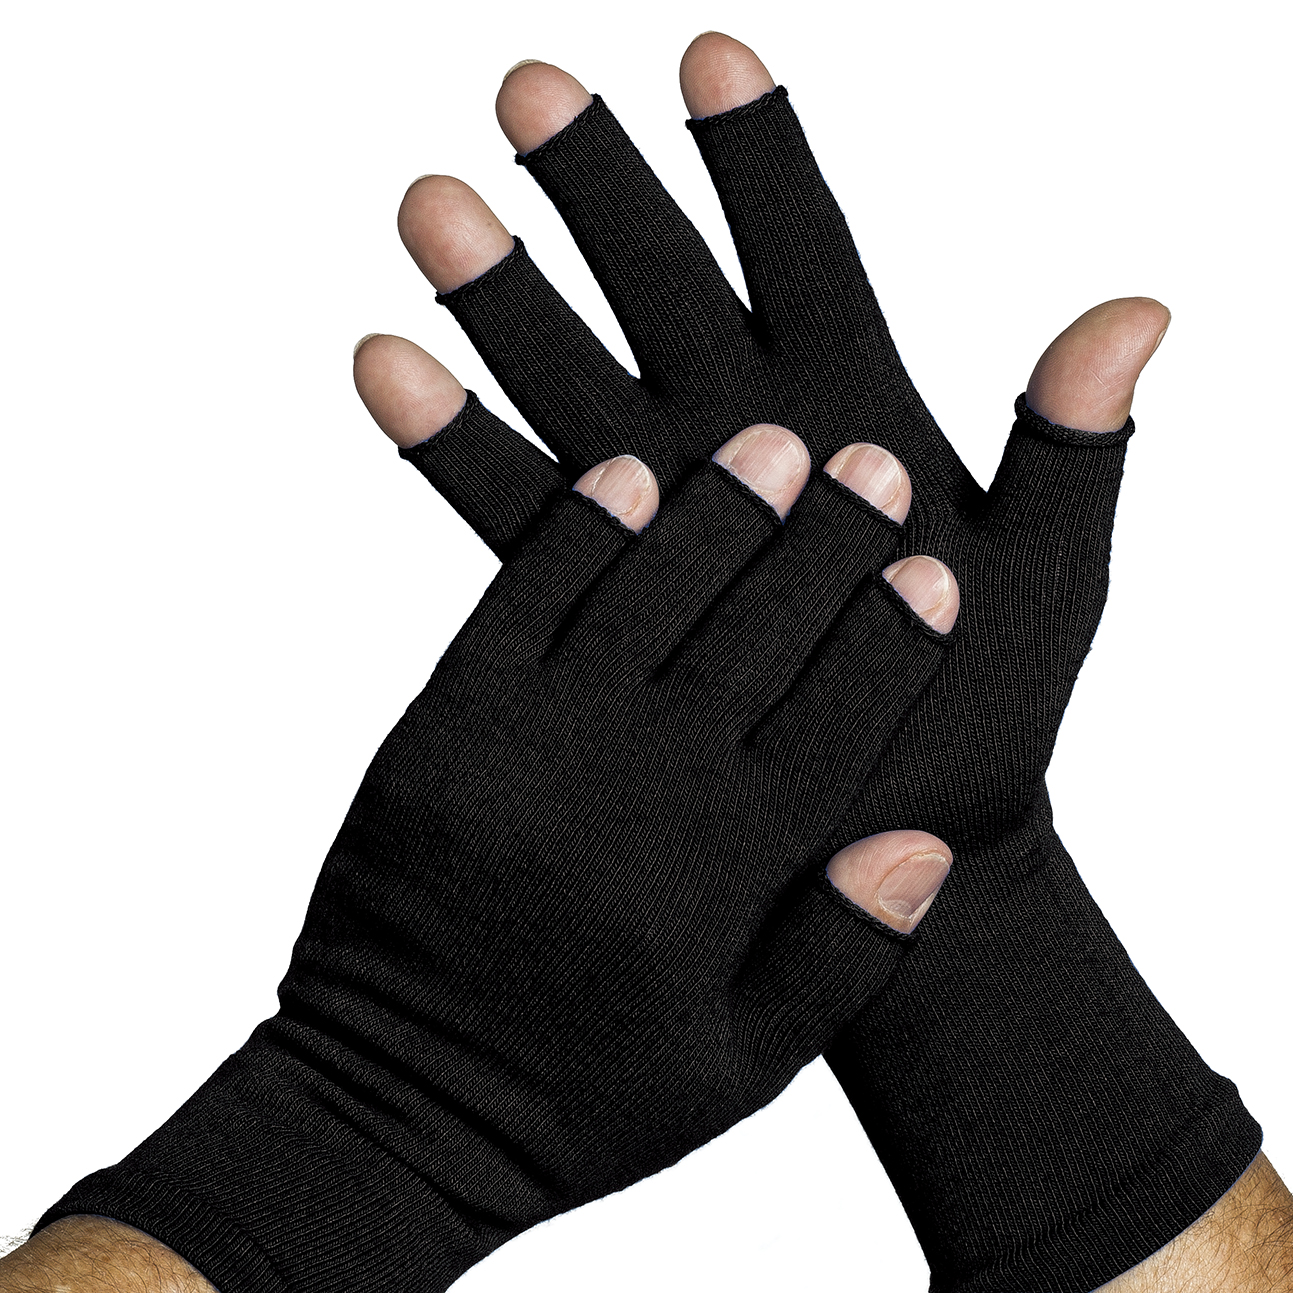 https://limbkeepers.com/wp-content/uploads/2016/10/3-4_finger_glove_black.jpg